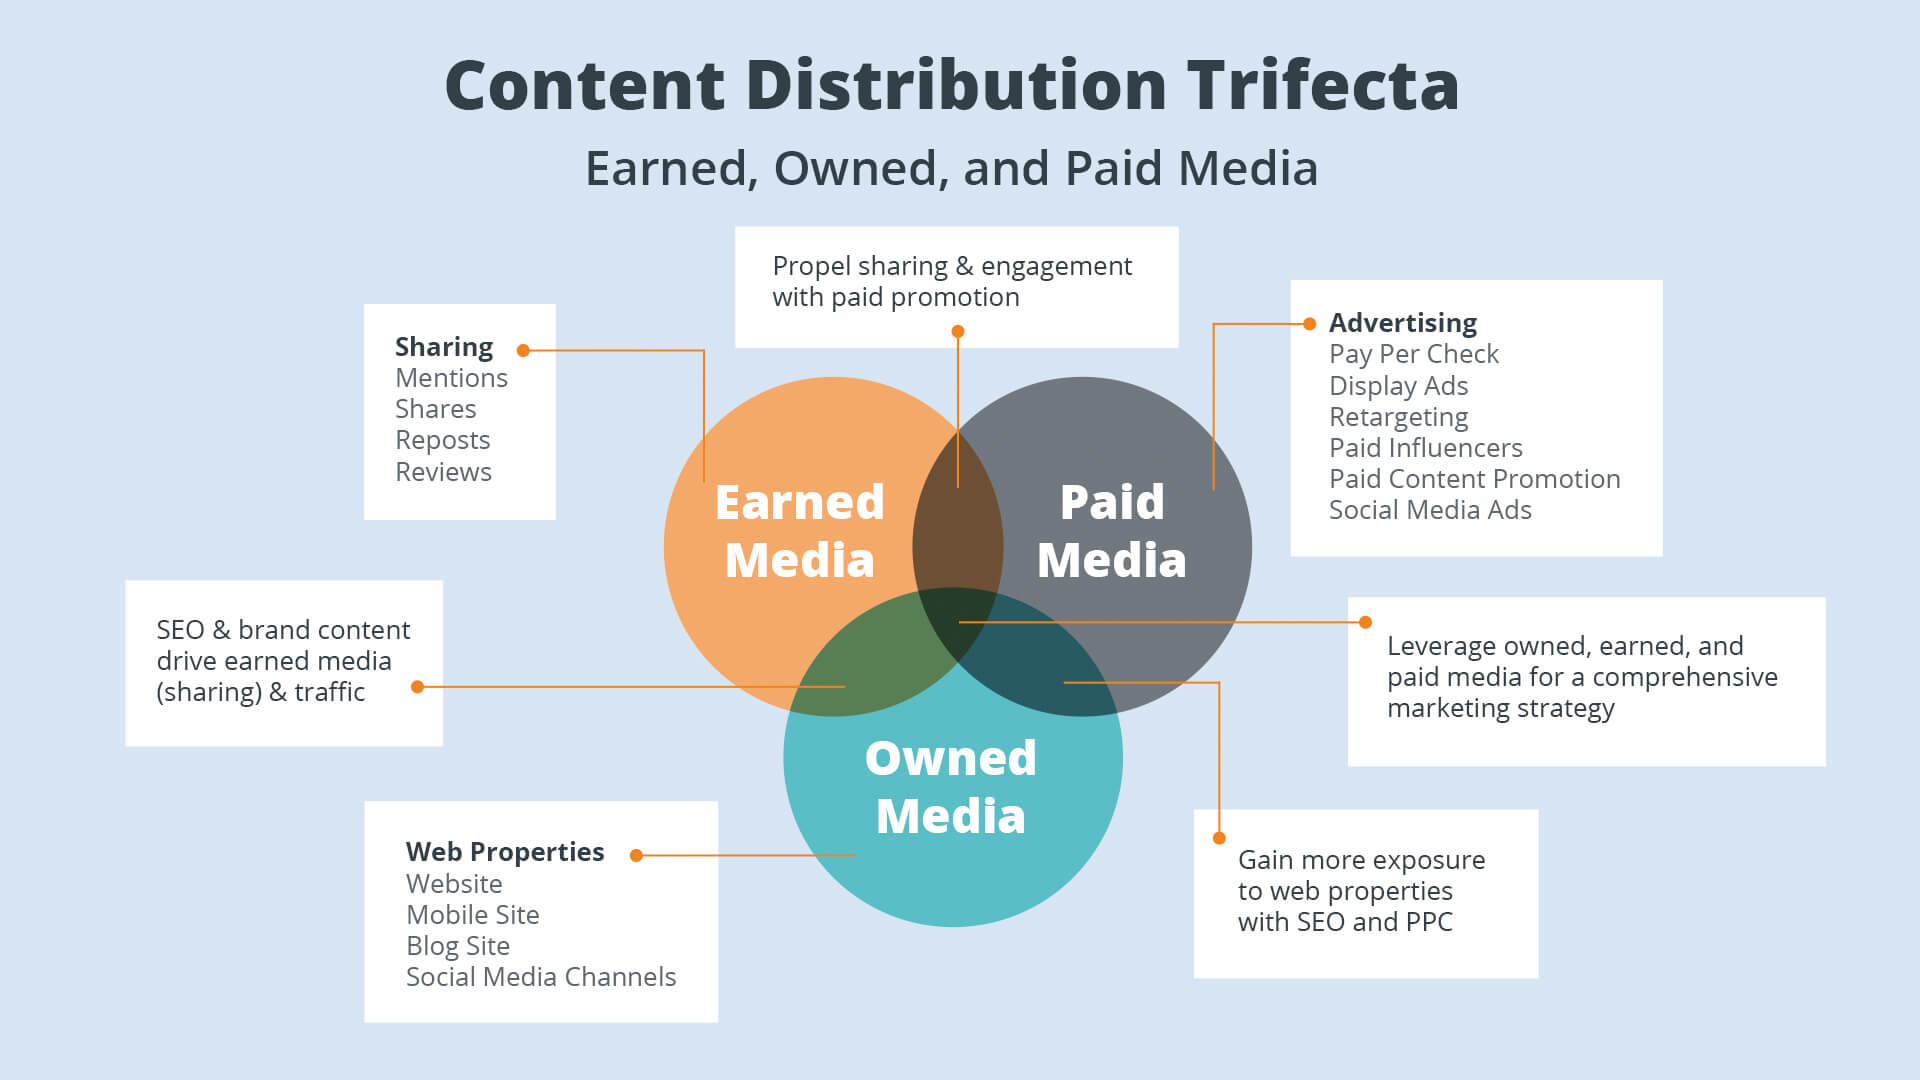 Content Distribution Trifecta - Content-distribution-trifecta